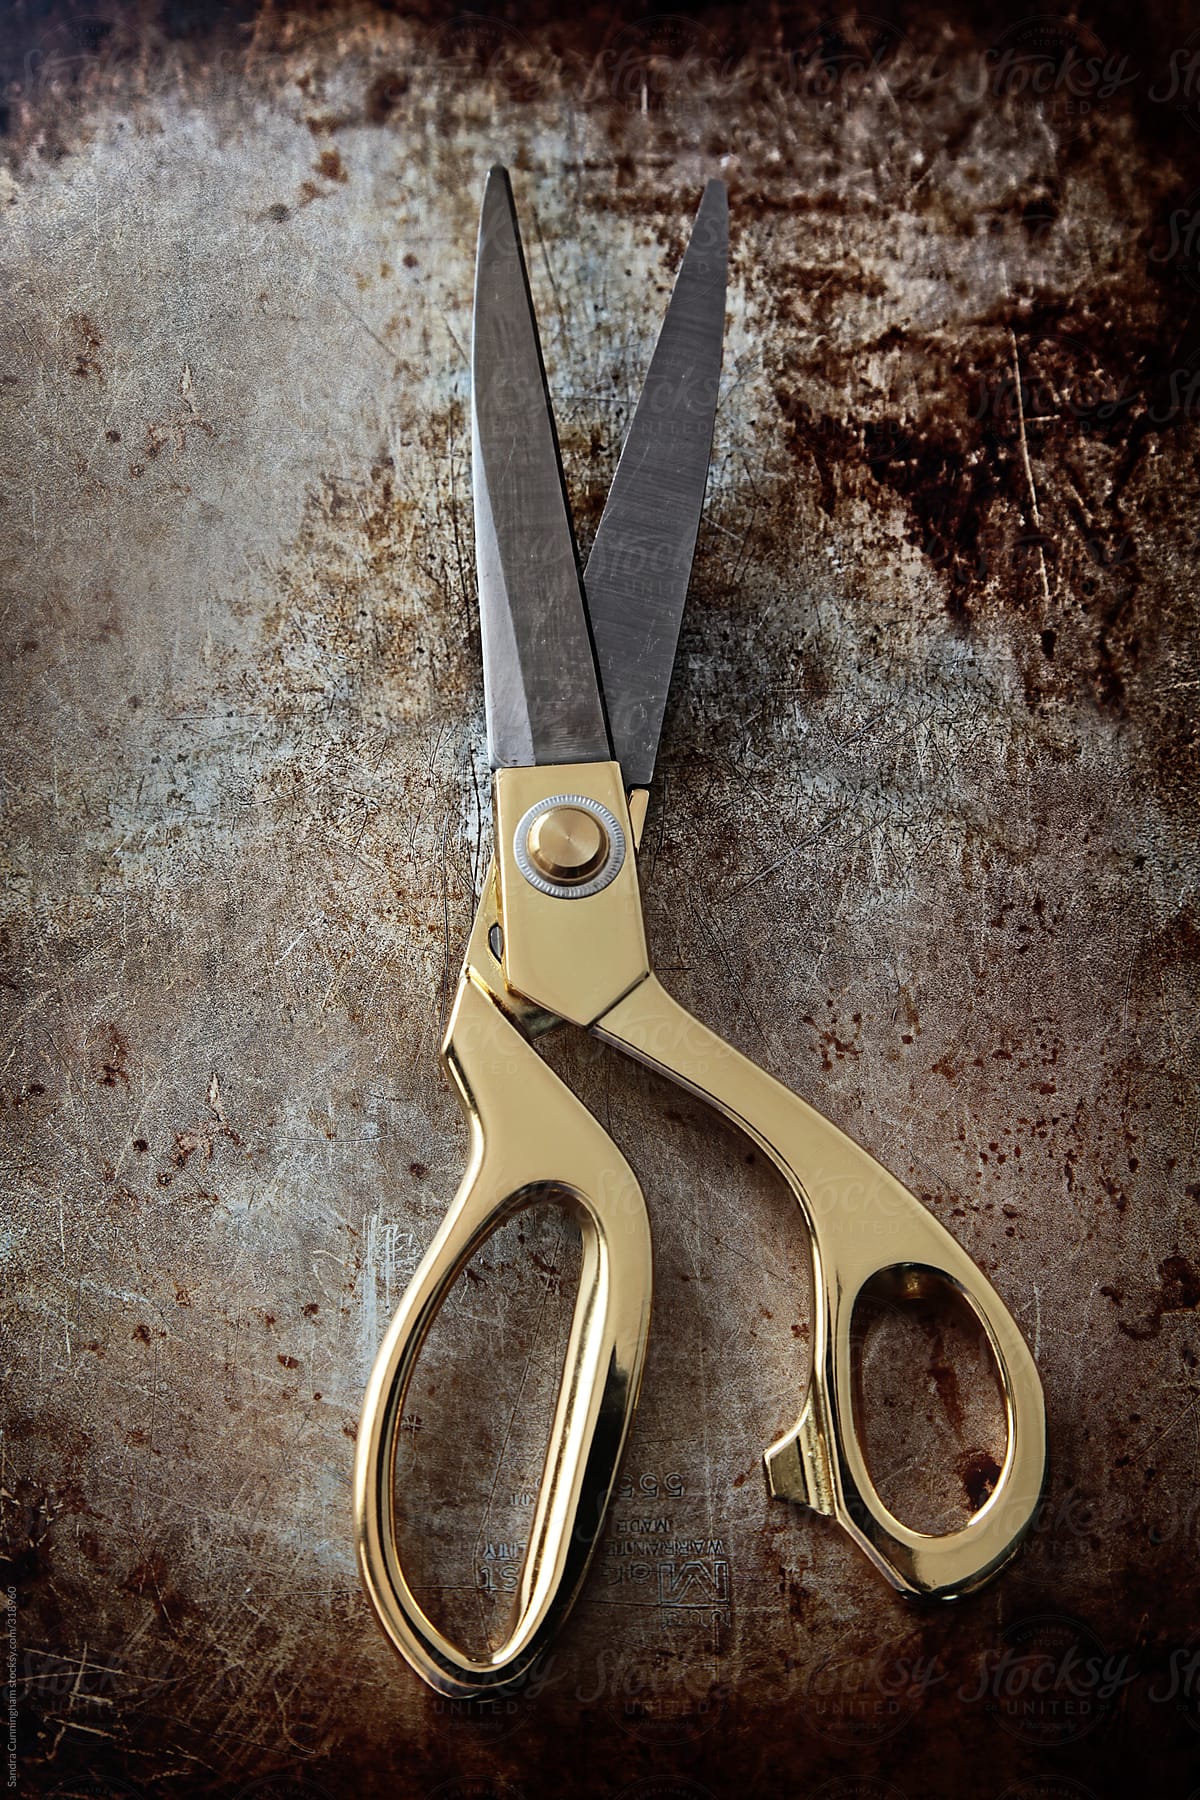 A pair of gold scissors